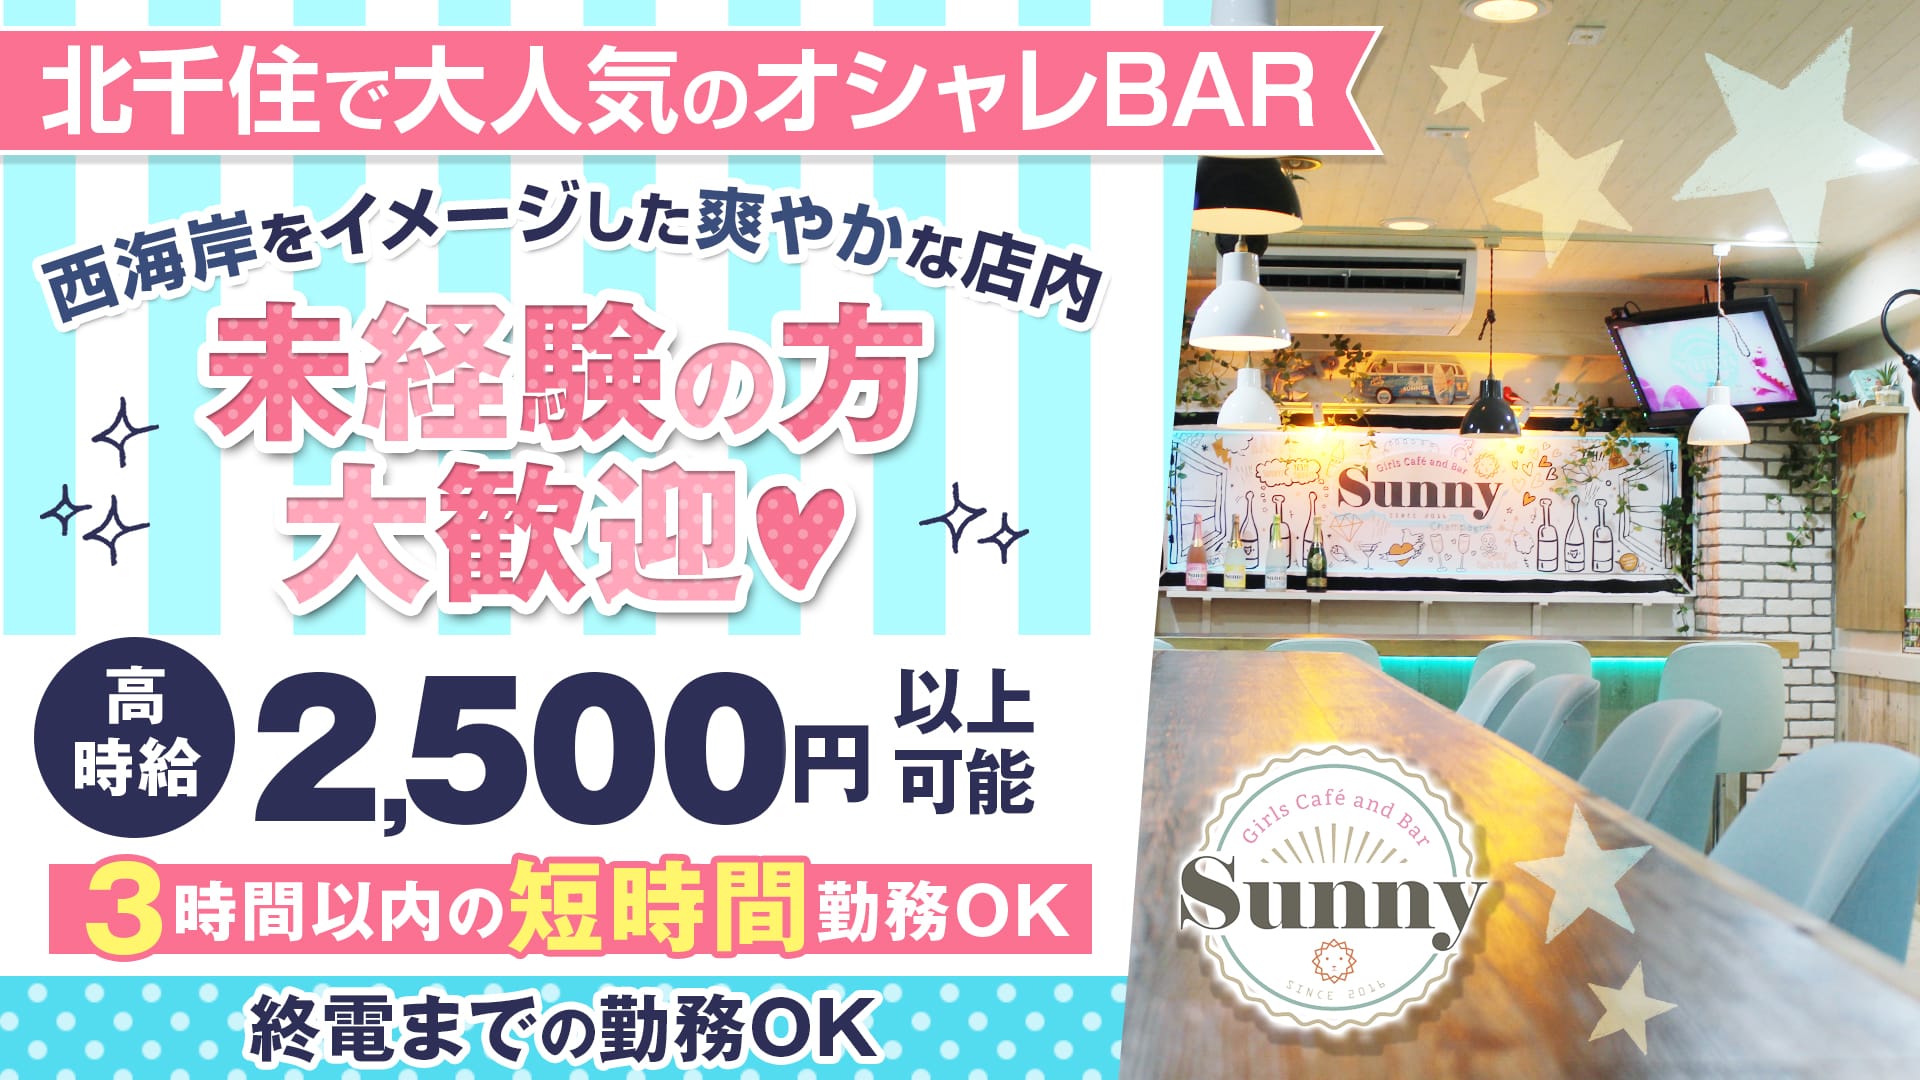 Girls cafe and Bar Sunny(ガールズカフェアンドバーサニー) 北千住ガールズバー TOP画像